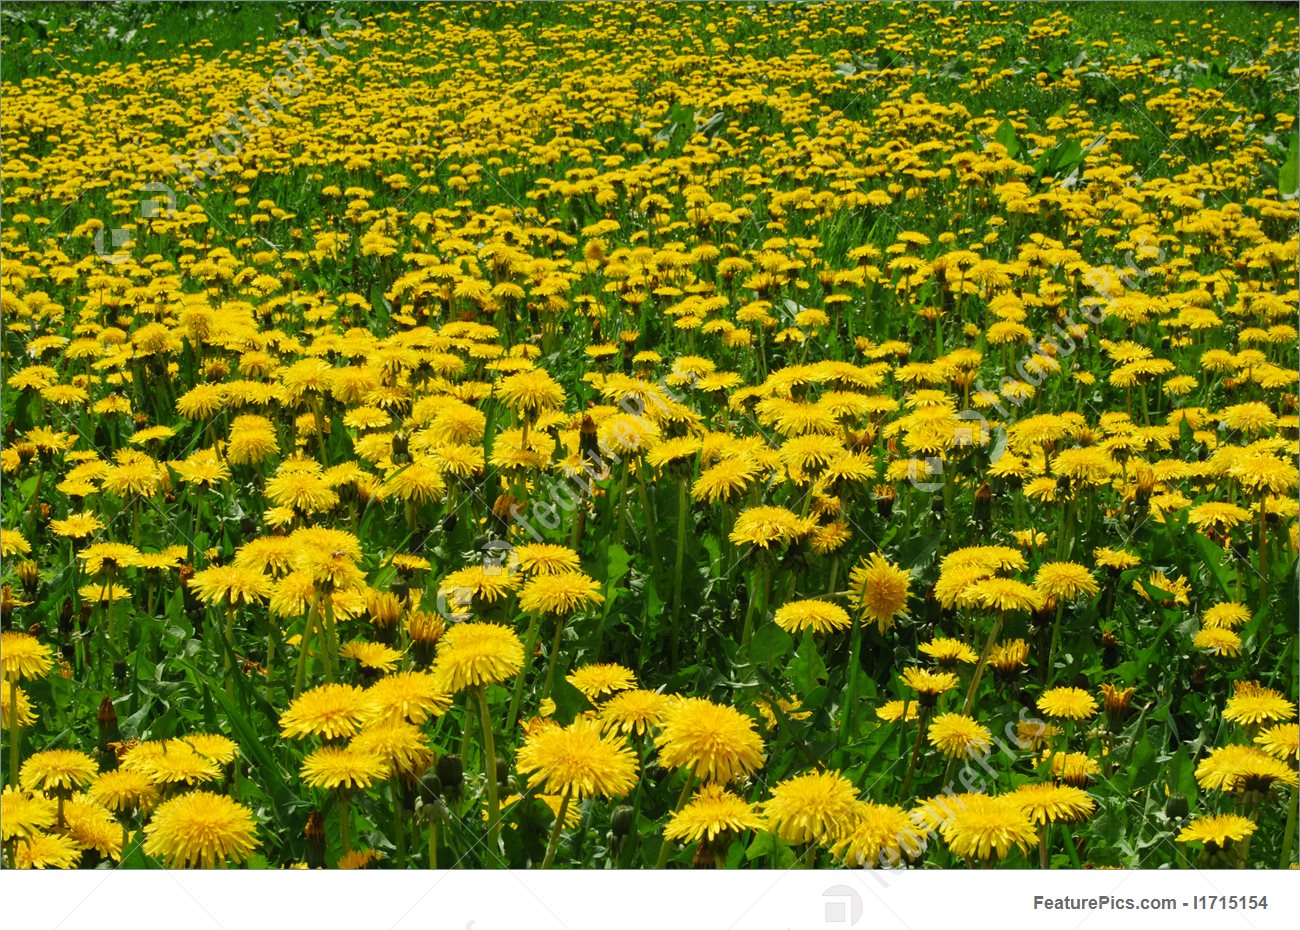 field-of-dandelions-stock-image-715154.jpg